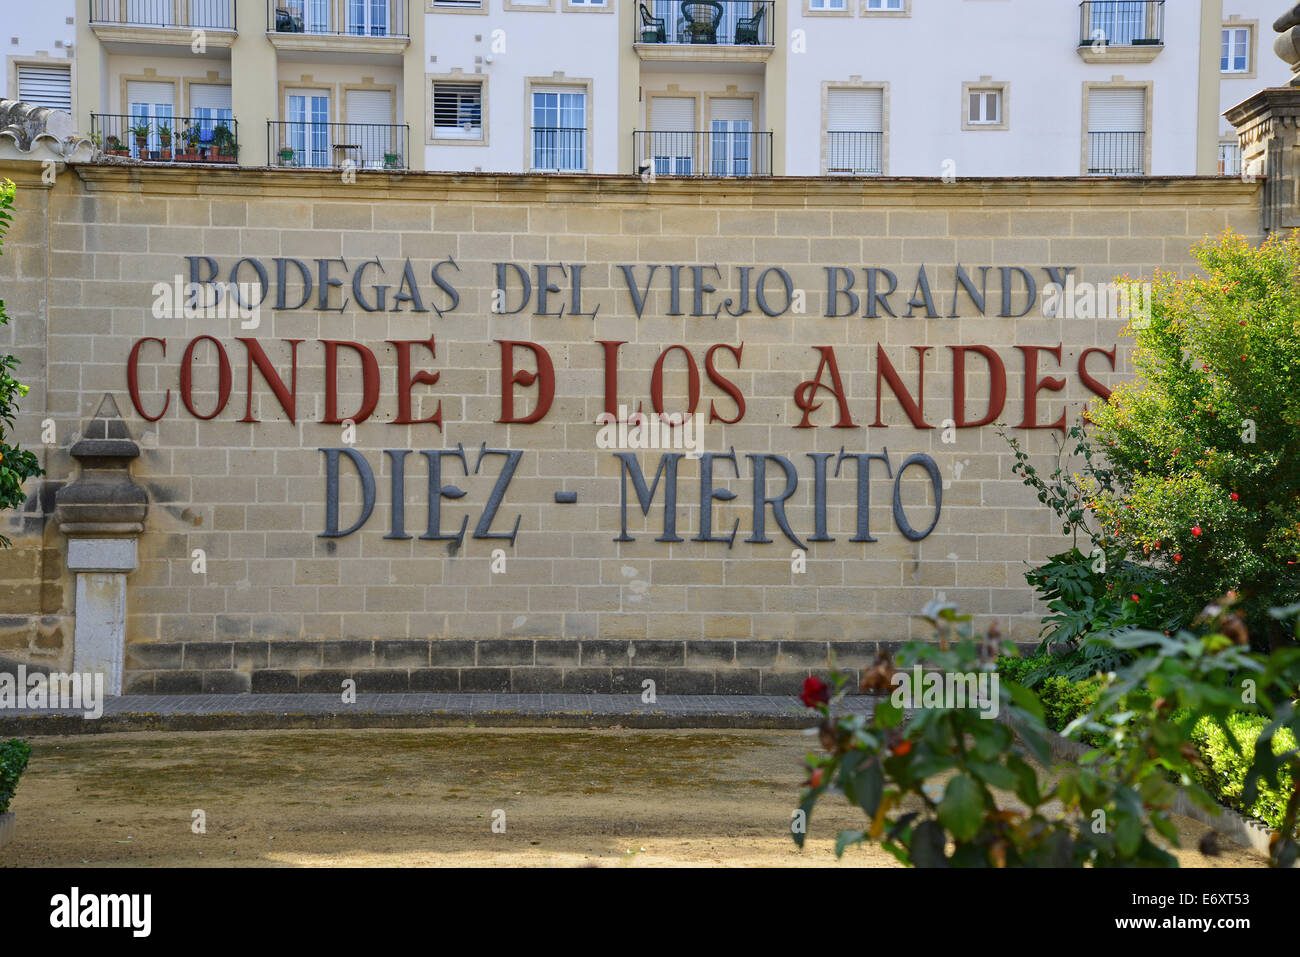 Conde de Los Andes Bodega, Calle Diego Fernández Herrera, Jerez de la Frontera, Province of Cádiz, Andalusia, Kingdom of Spain Stock Photo